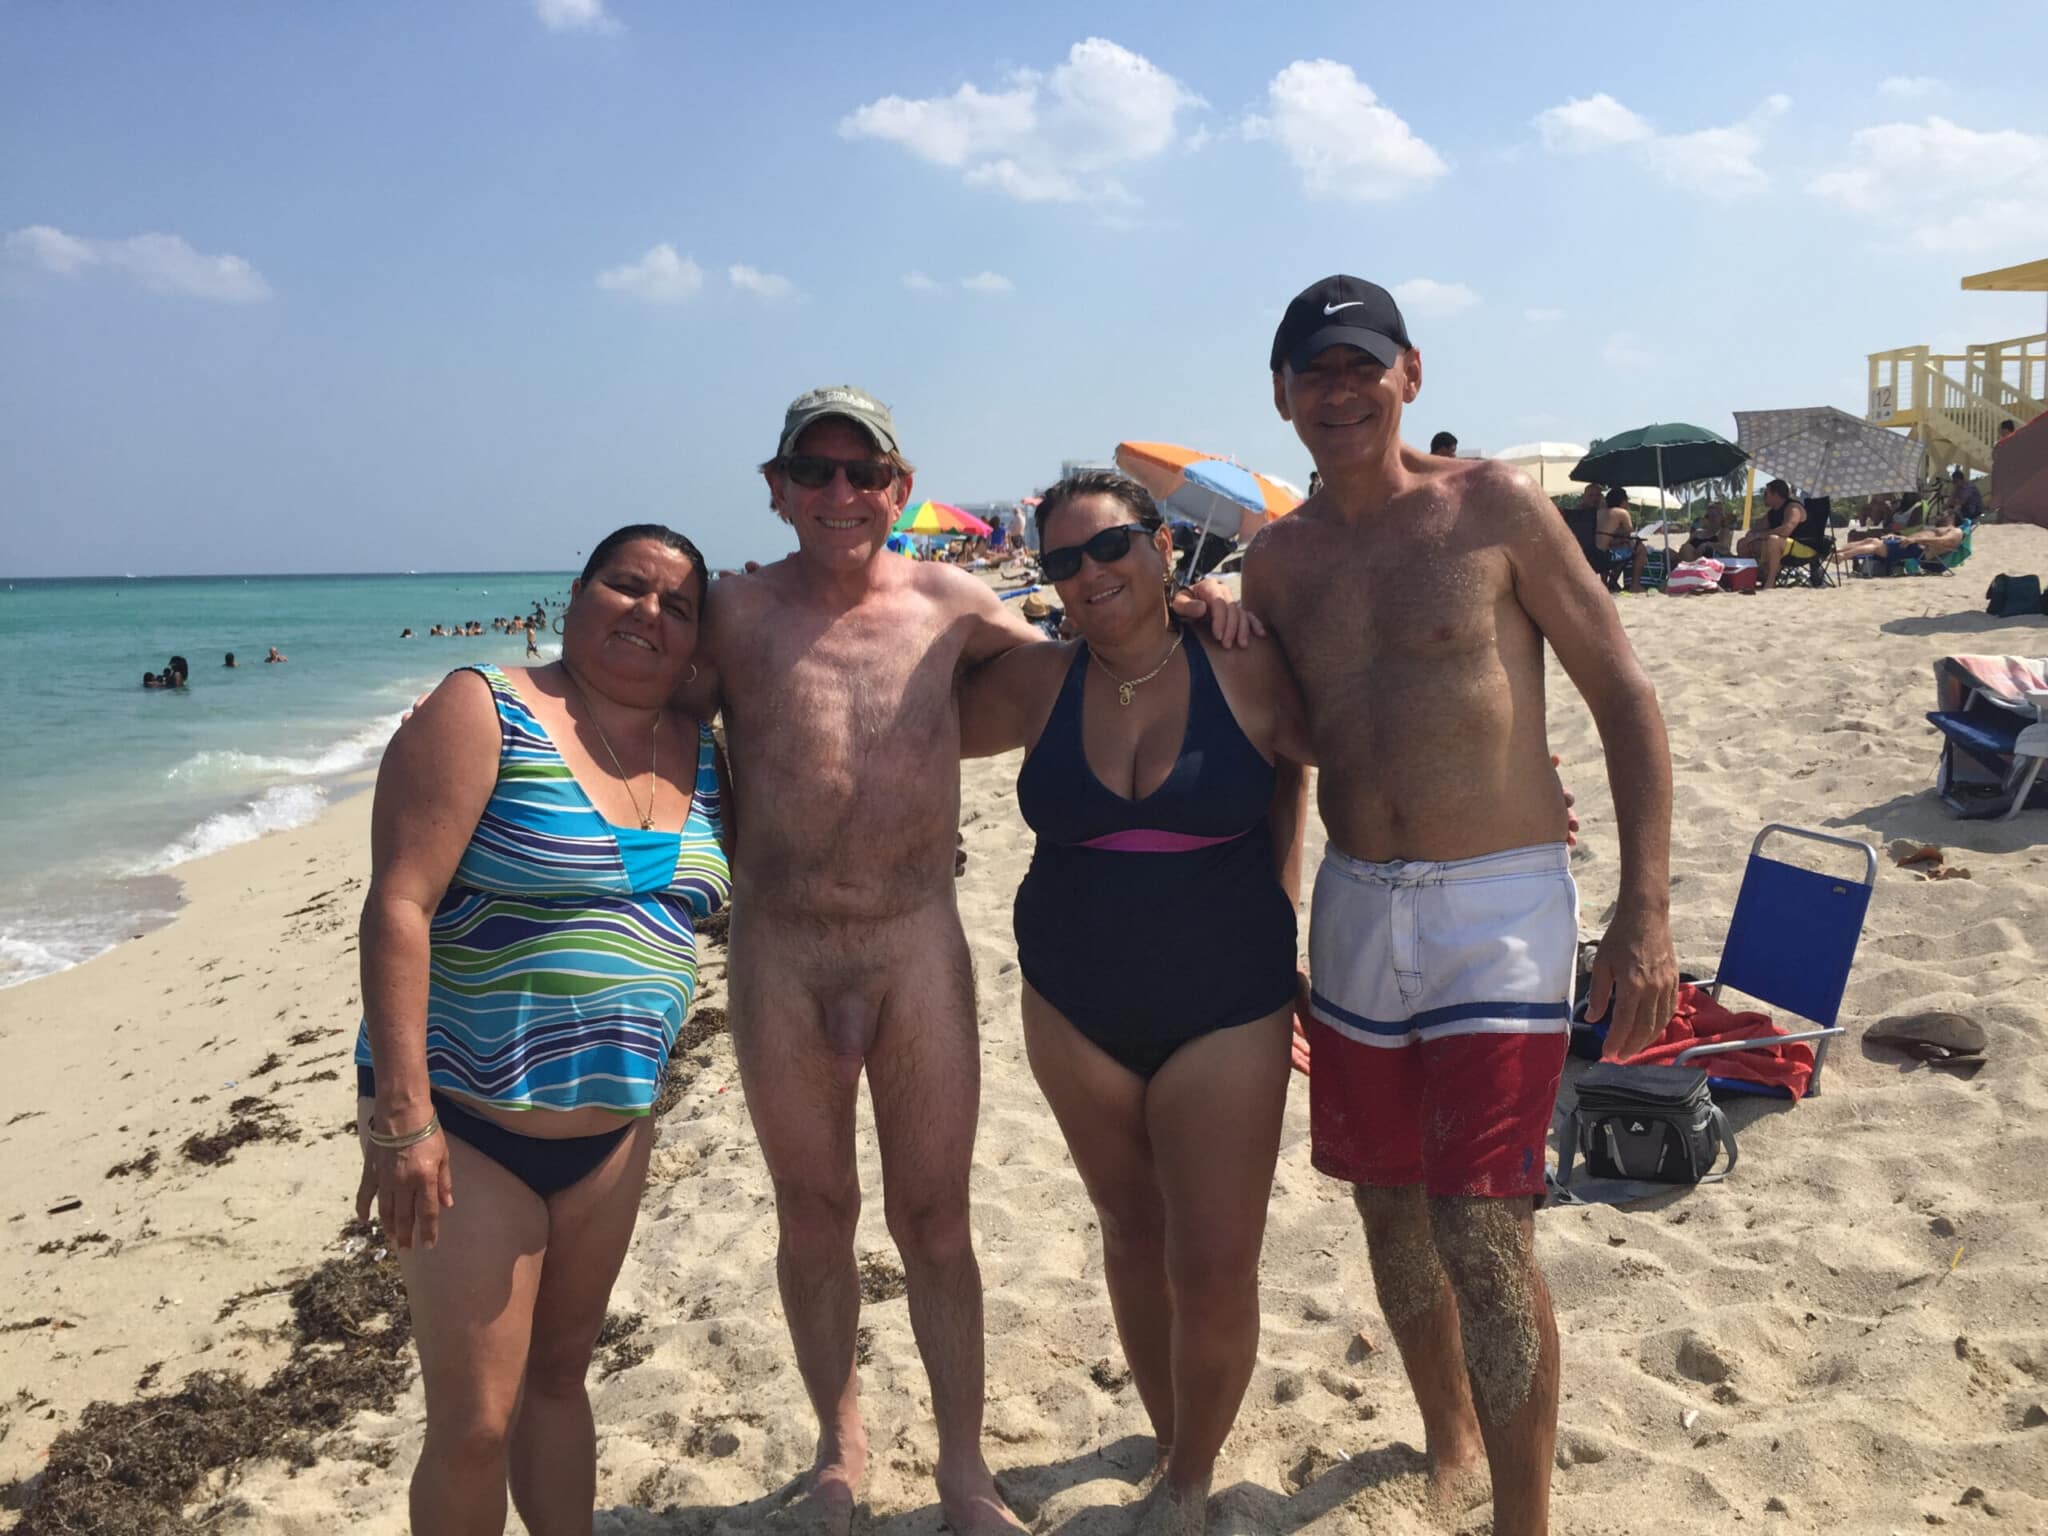 Real Amateurs Public Nudity Pics Nude Beach Pics Dick Flash Pics